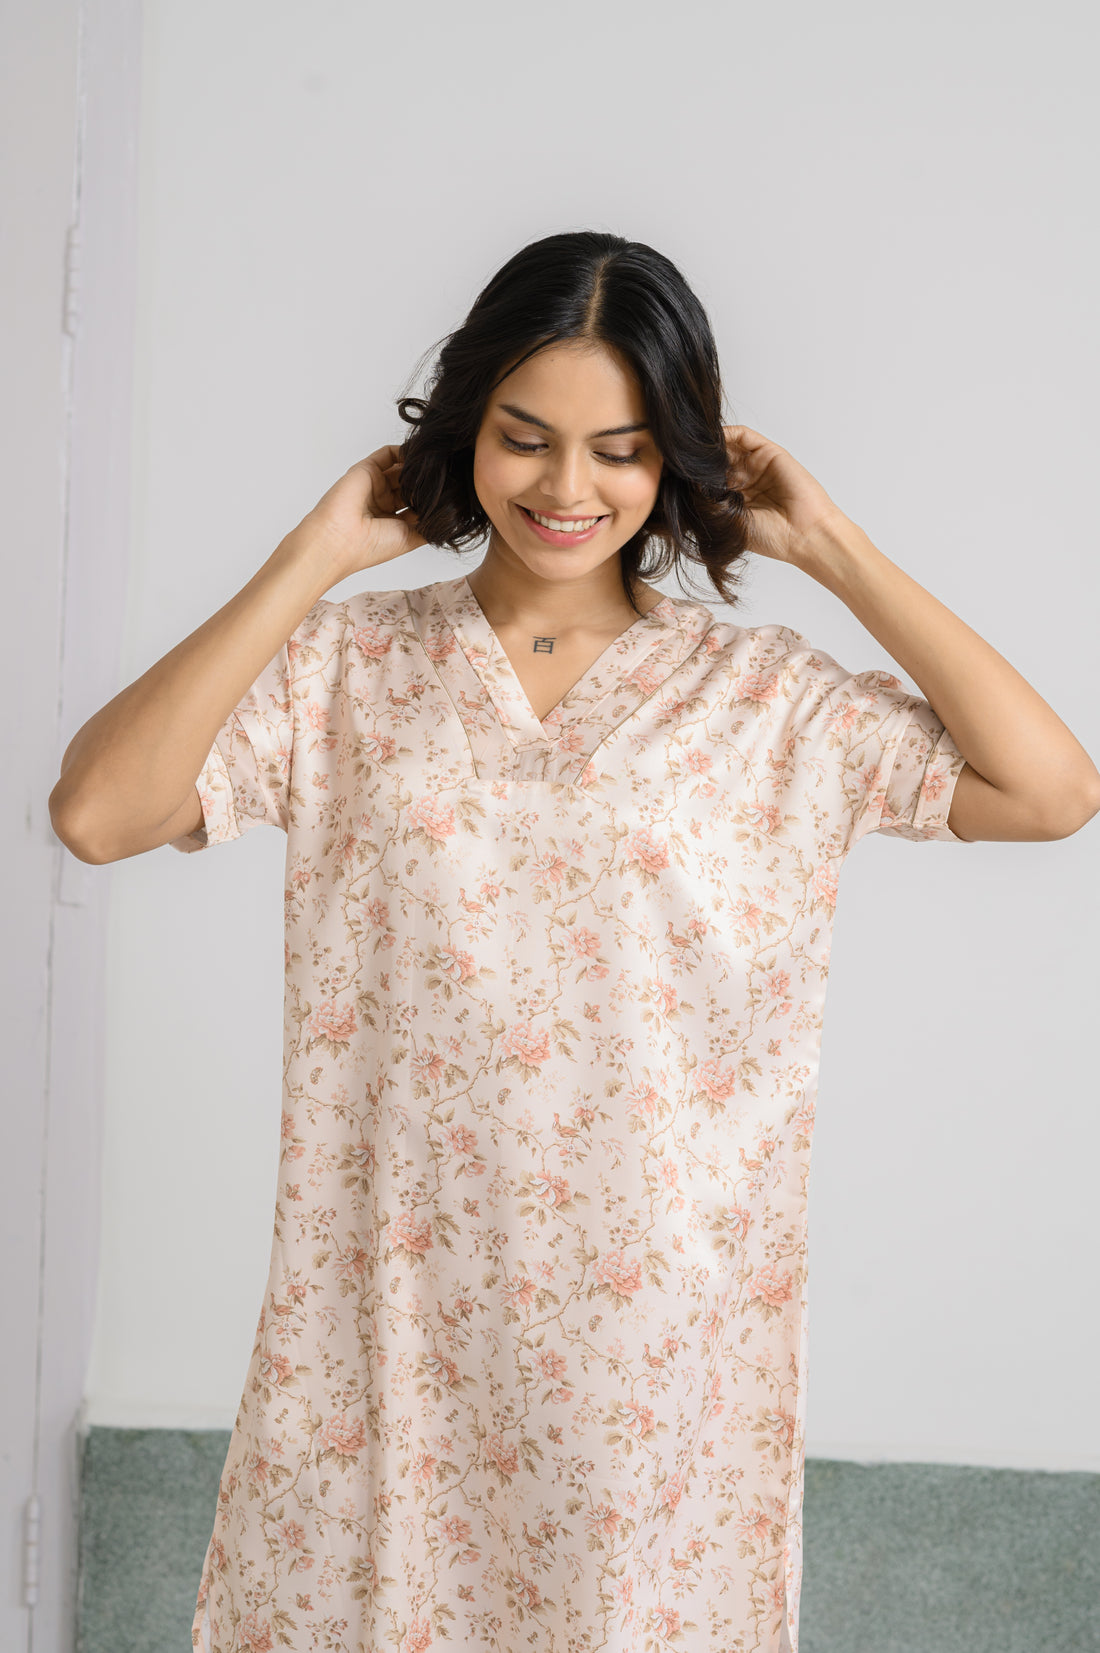 Boyfriend's Shirt Inspired: Beige Delicate Floral Print Short Nighty